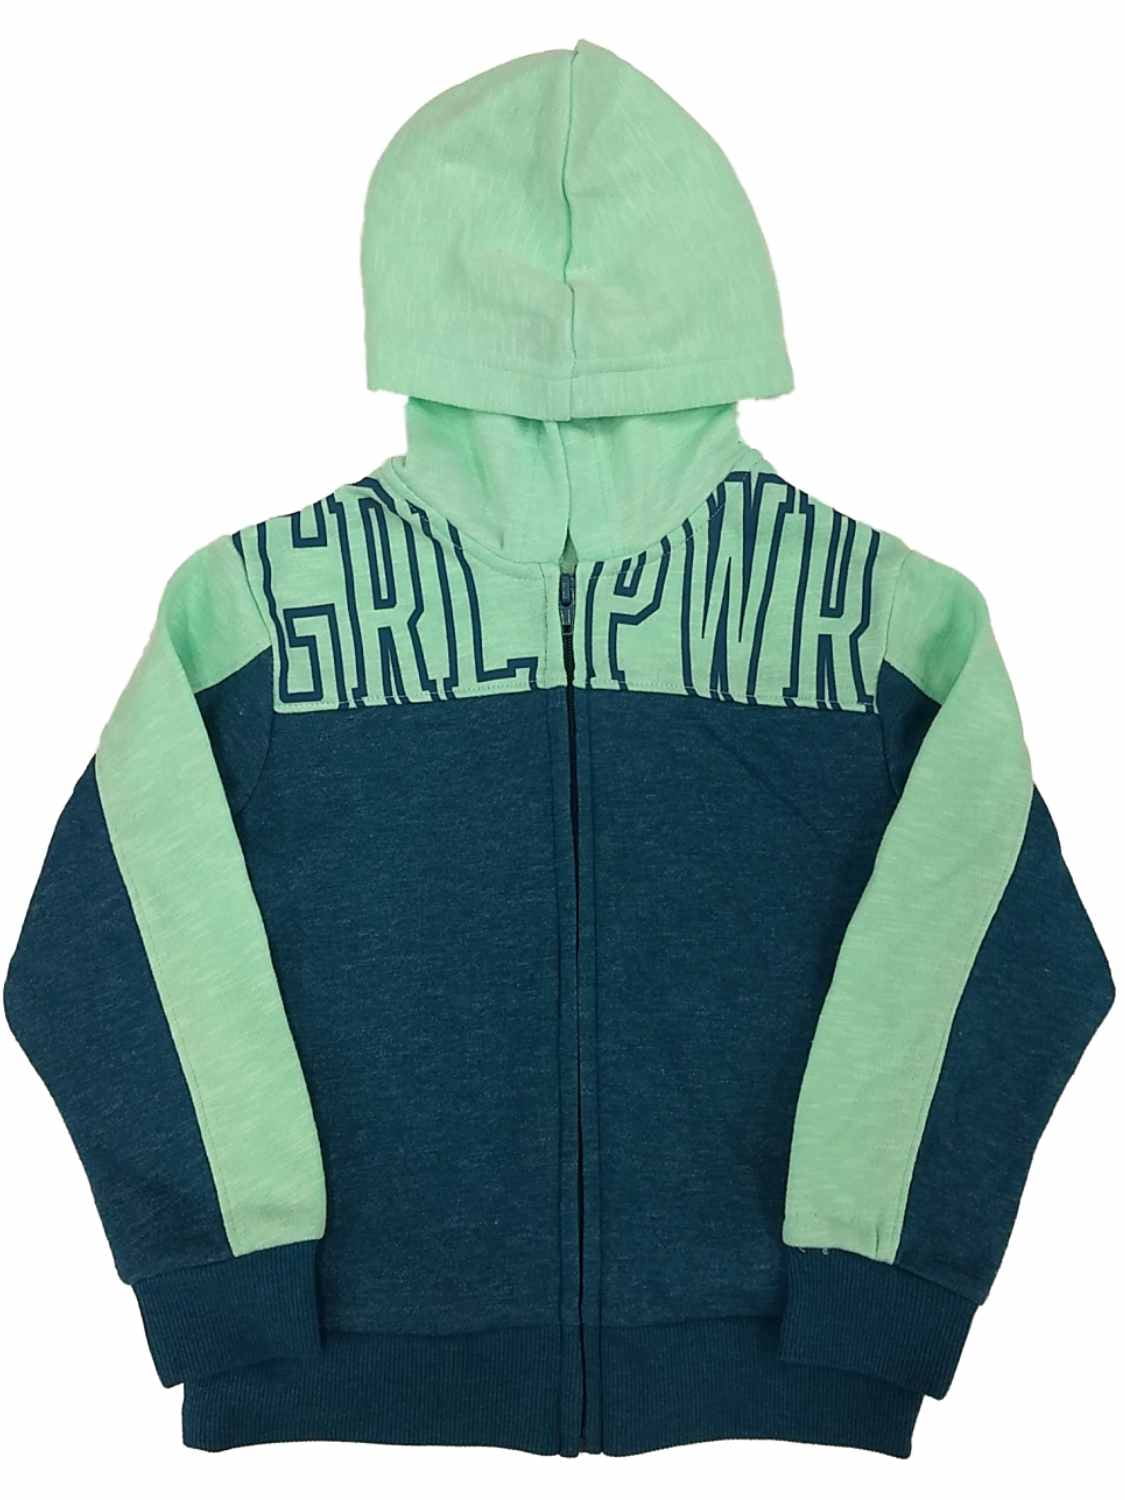 Xersion Girls Teal & Blue Girl Power Zip Front Hoodie Sweatshirt Jacket ...